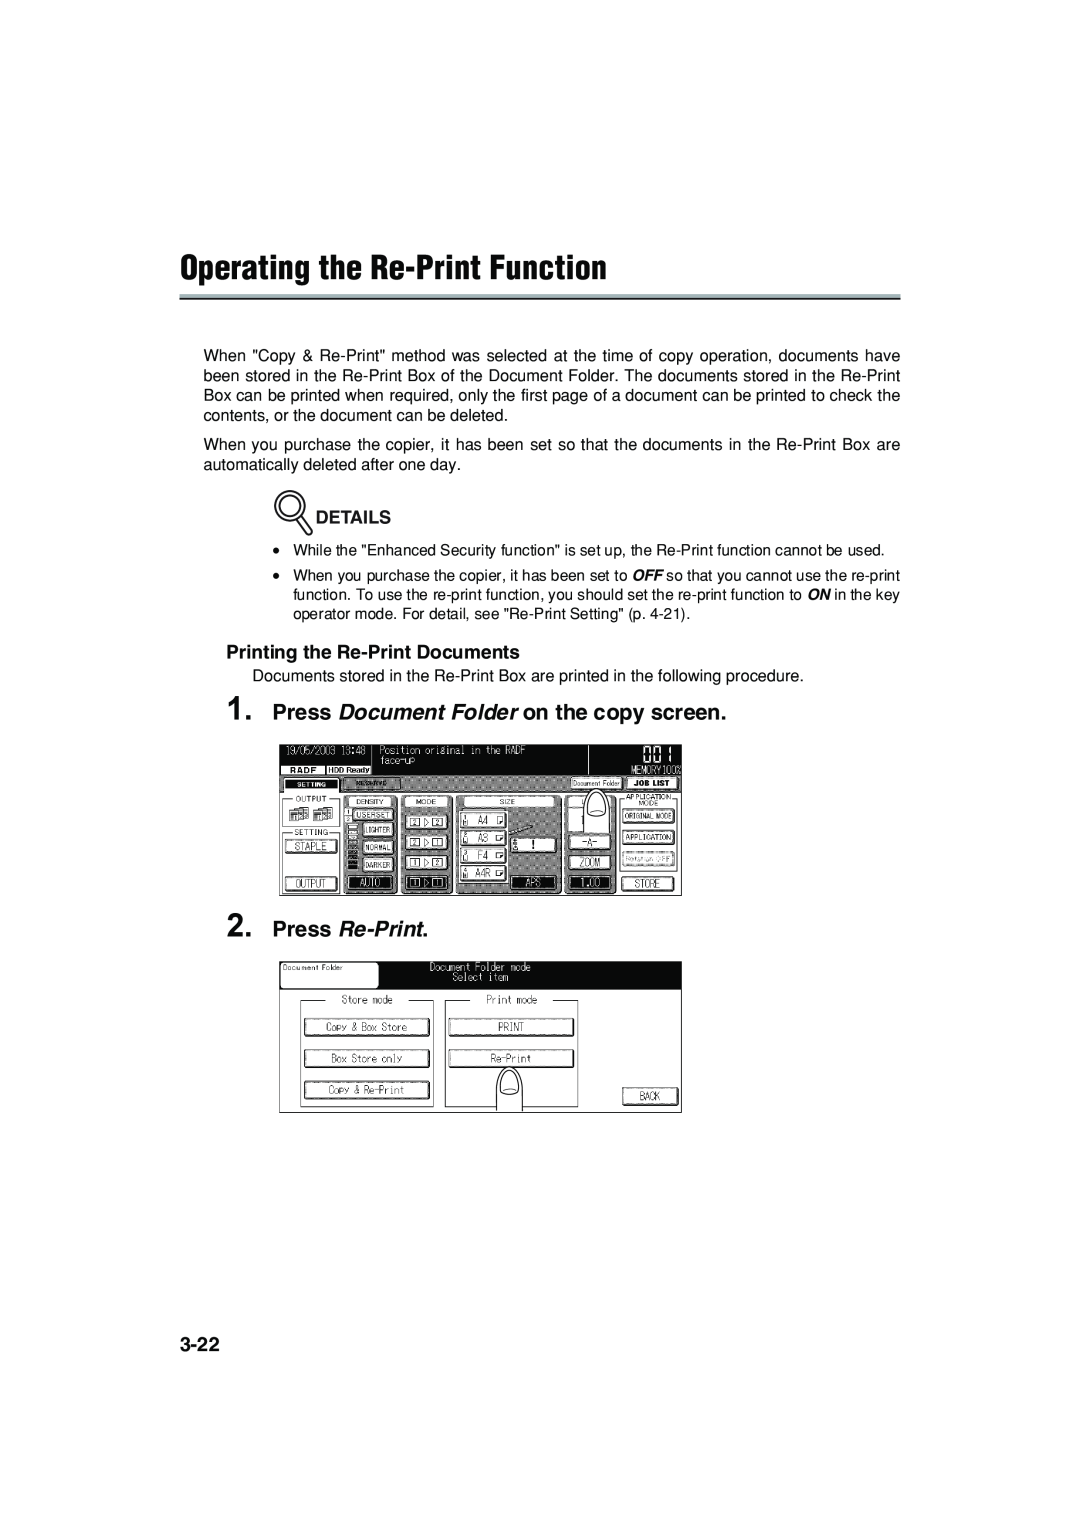 Konica Minolta 7222 Operating the Re-Print Function, Press Document Folder on the copy screen, Press Re-Print, Details 